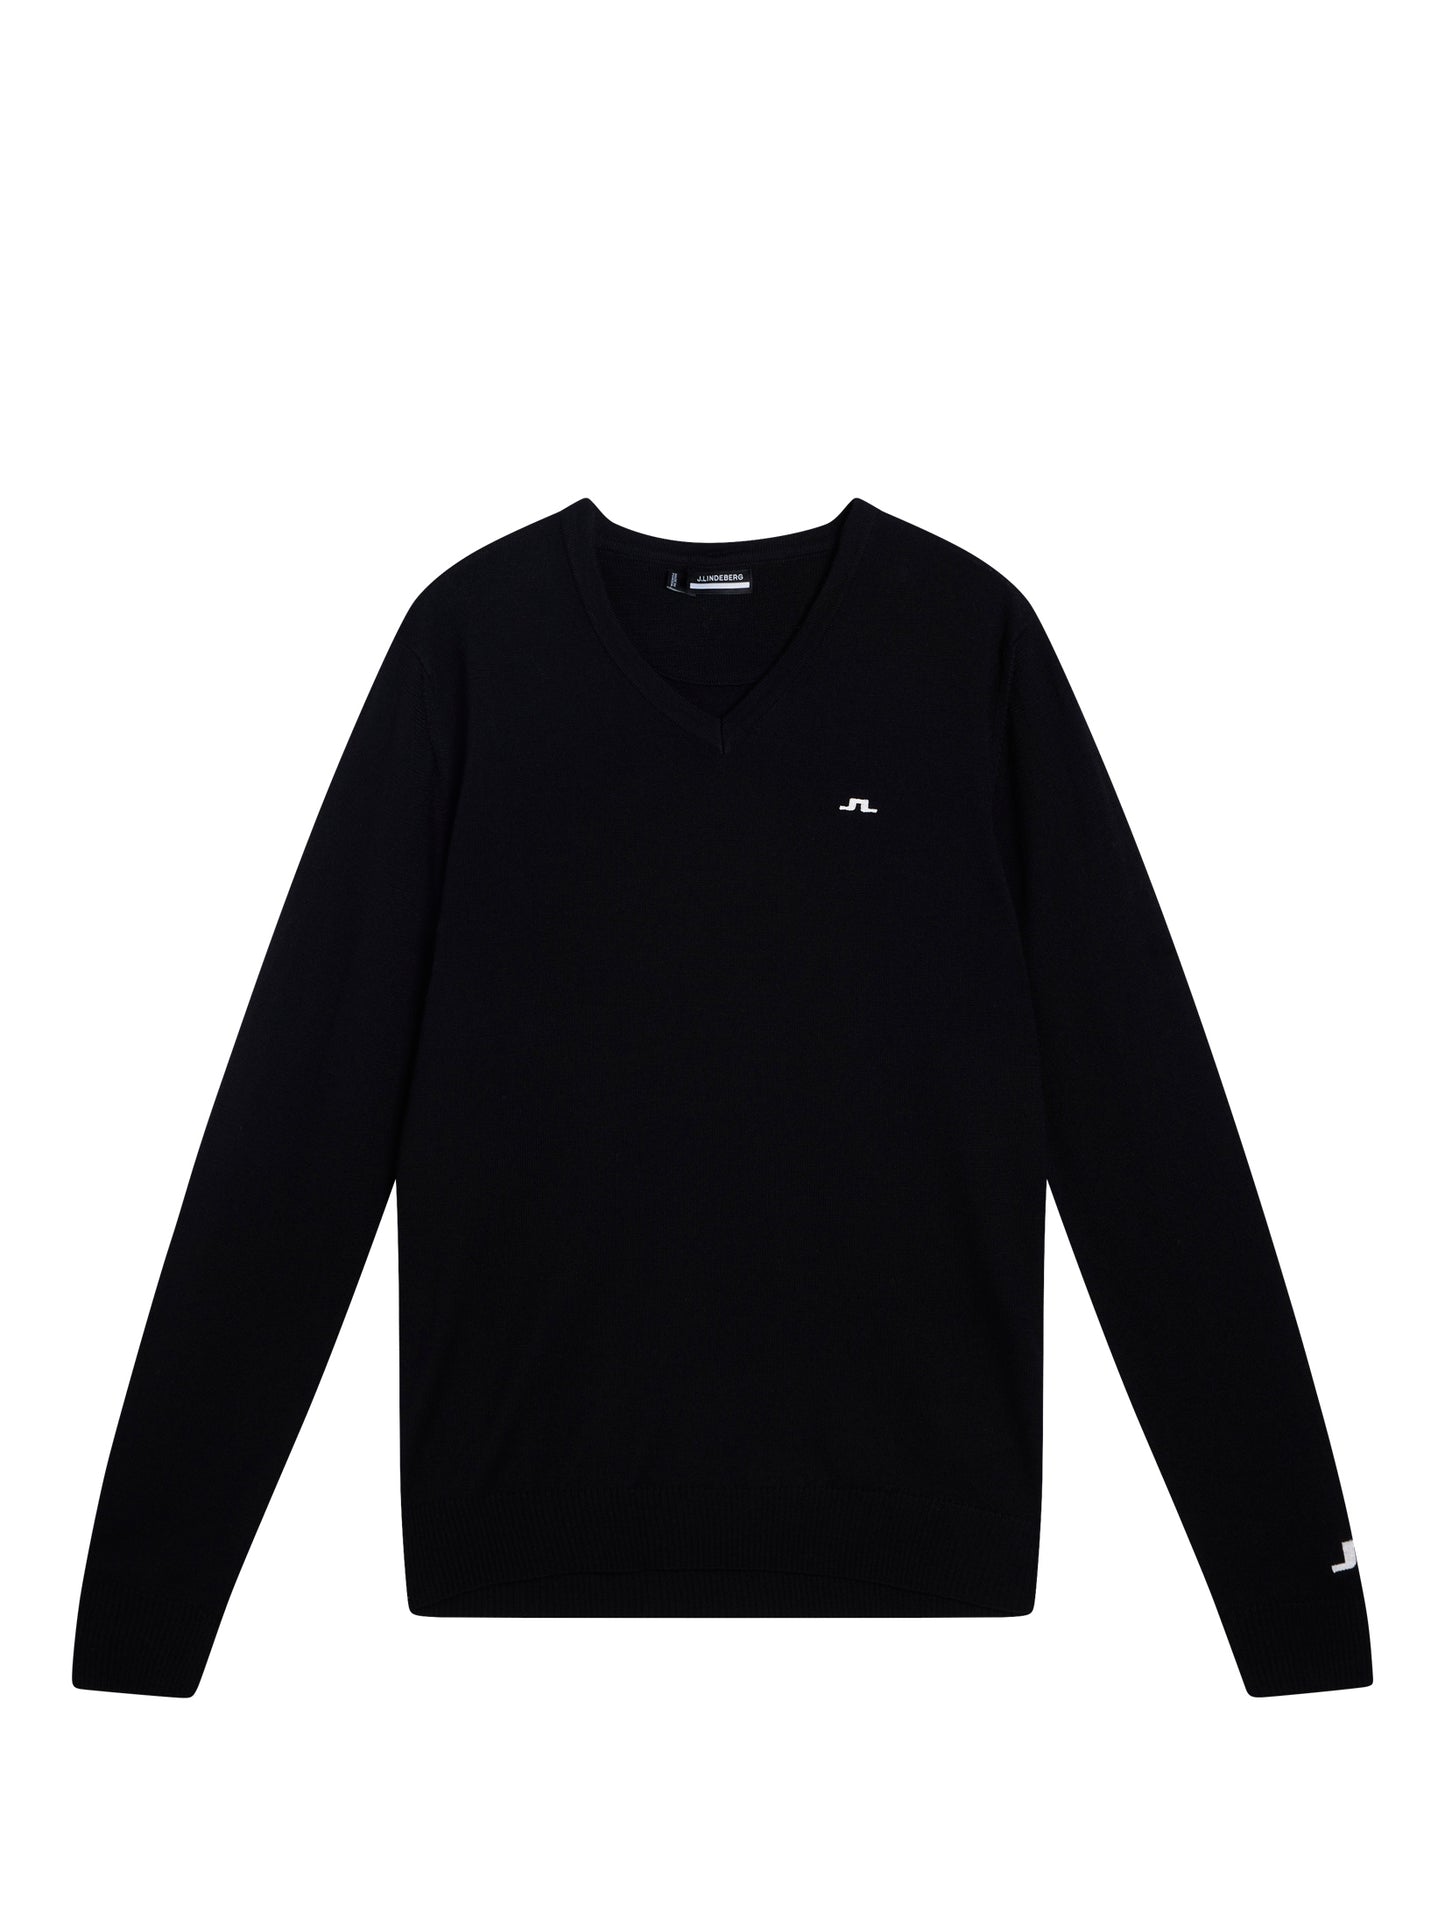 Lymann Knitted Sweater / Black